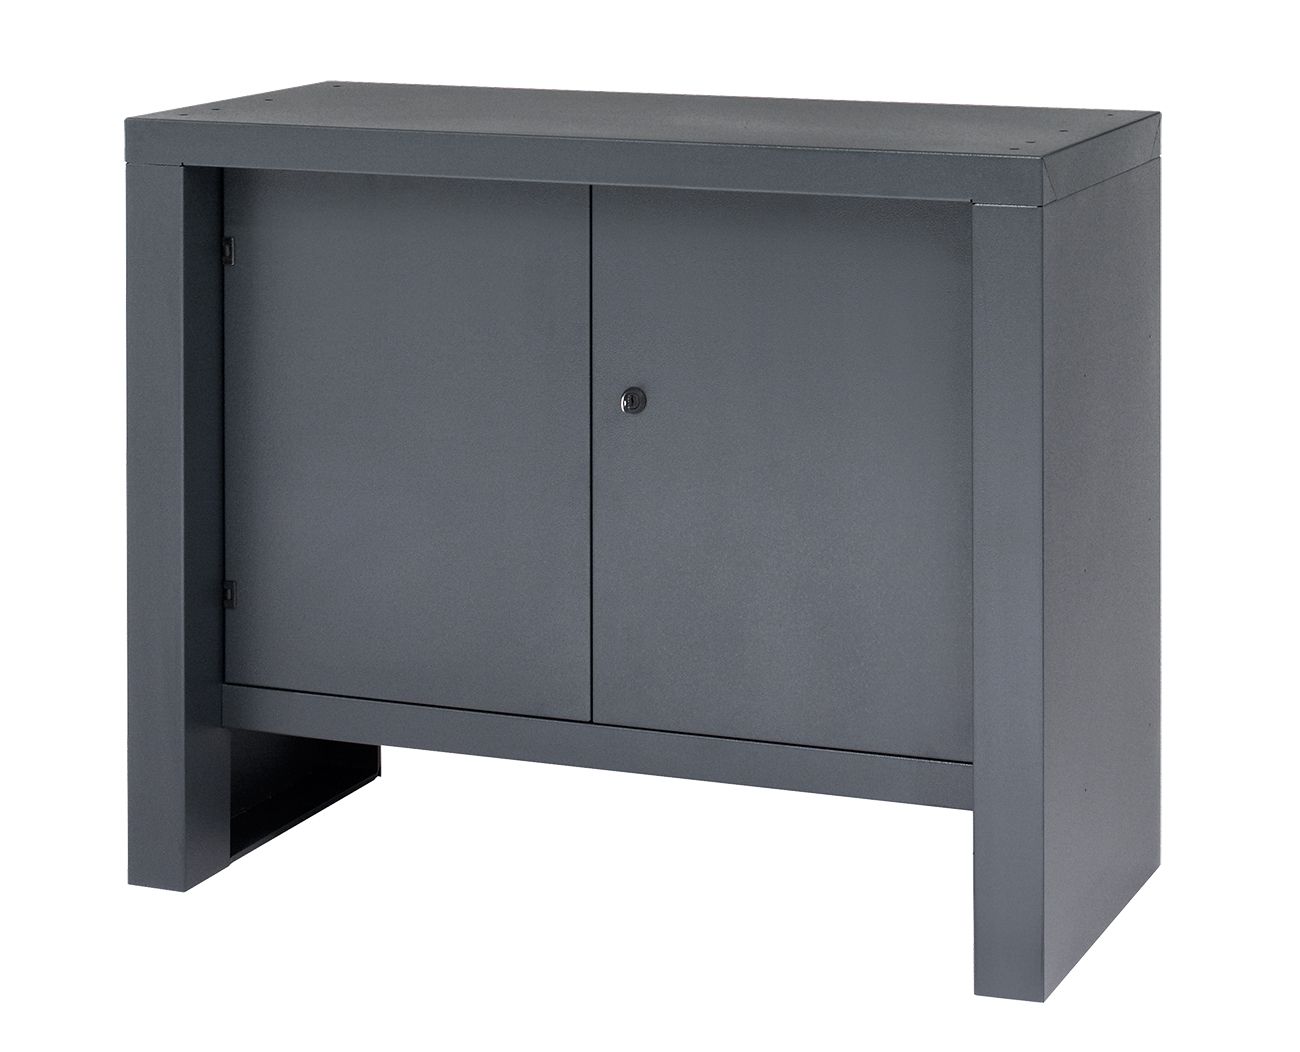 Machine base cabinet W1000 x D700 x H850 mm